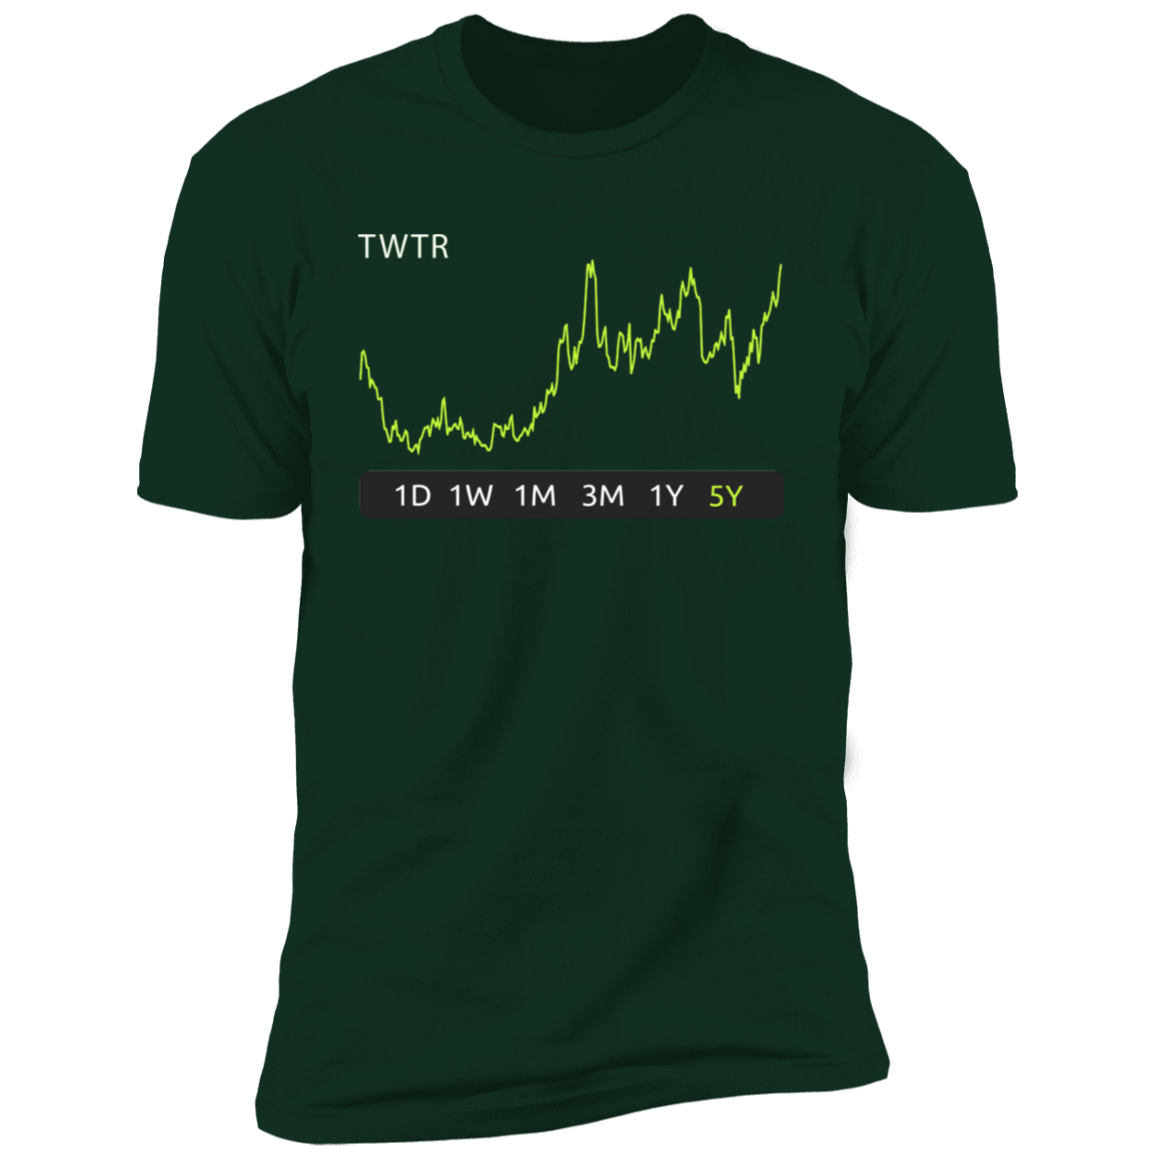 TWTR Stock 5y Premium T-Shirt